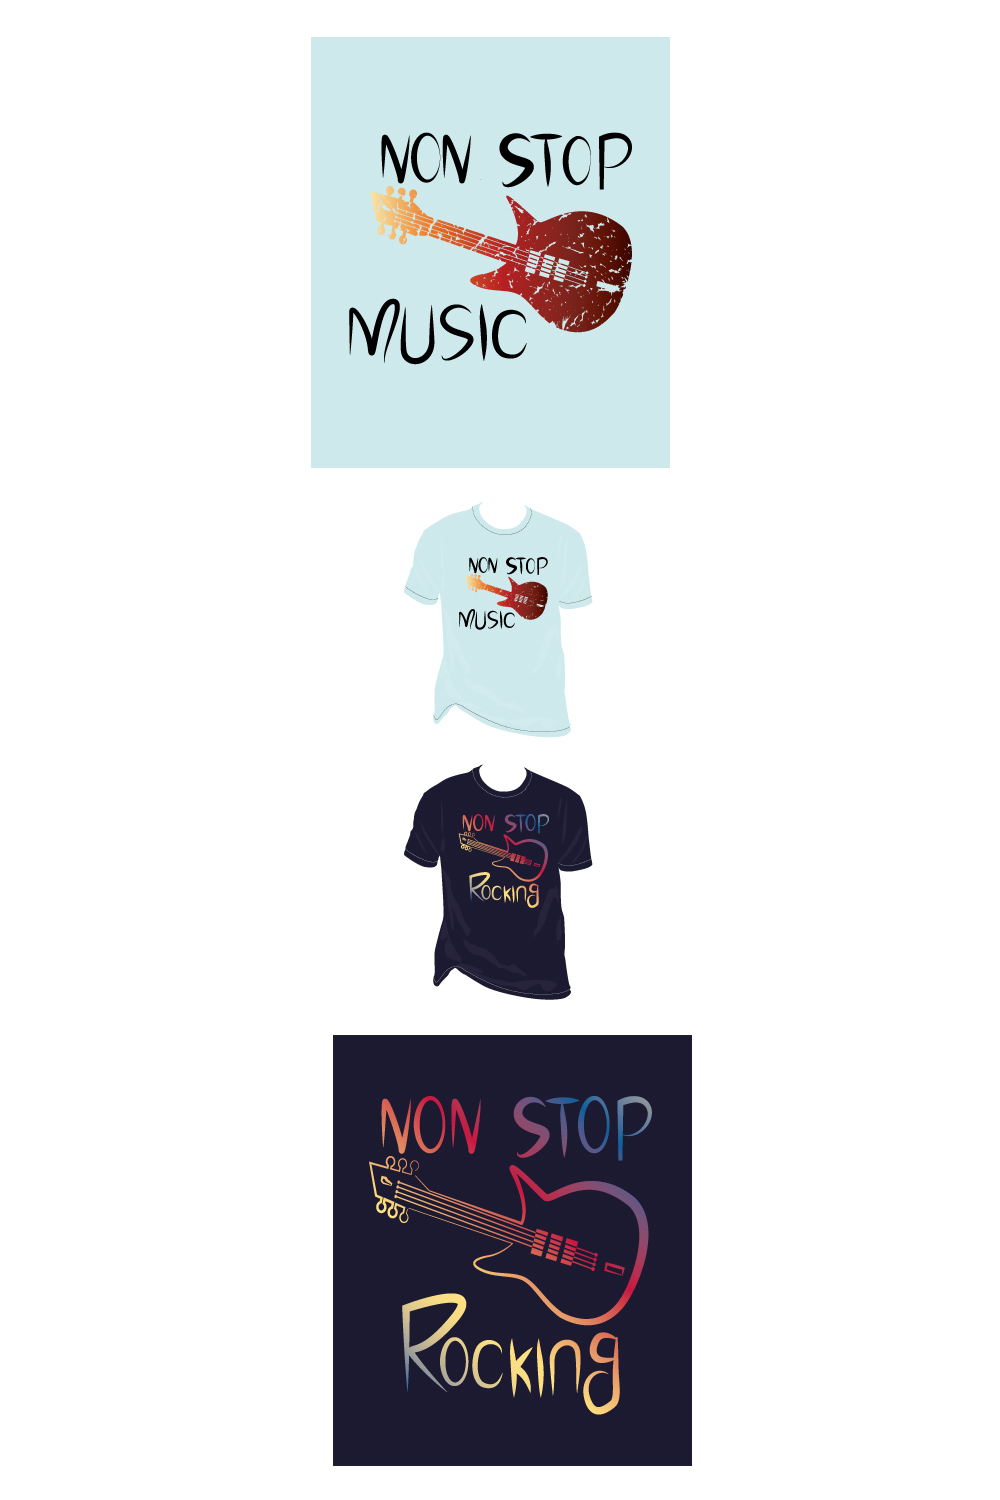 Non Stop Rocking Hand Draw Guitar Typography logotype T Shirt Design set pinterest preview image.